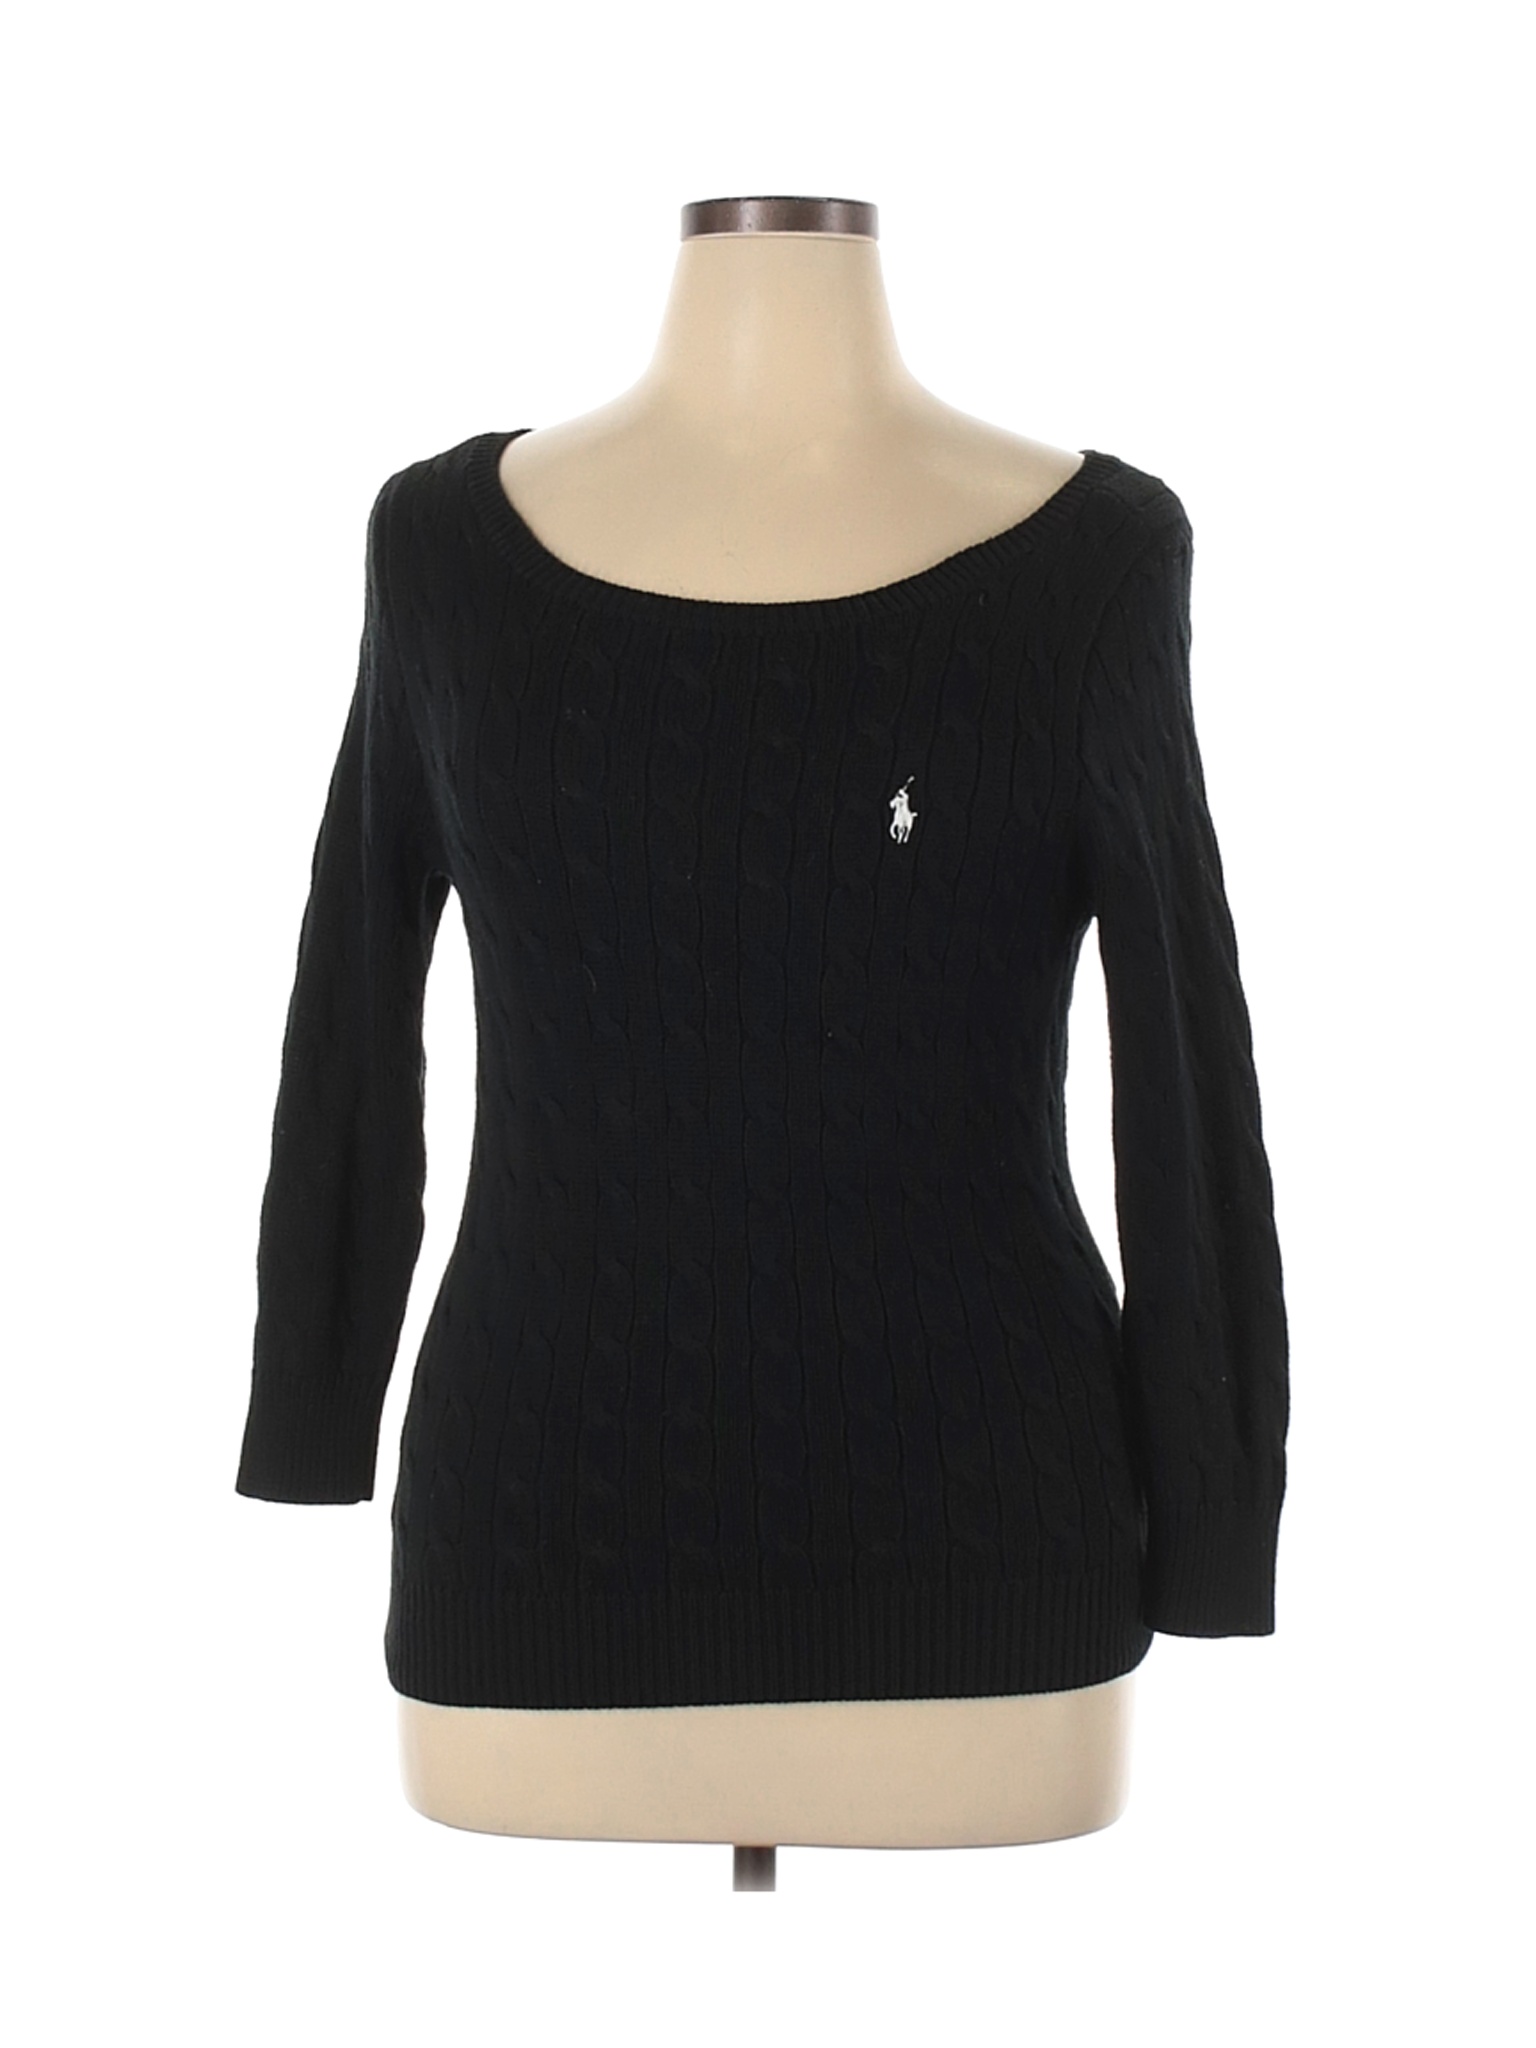 Ralph Lauren Sport Women Black Pullover Sweater XL | eBay